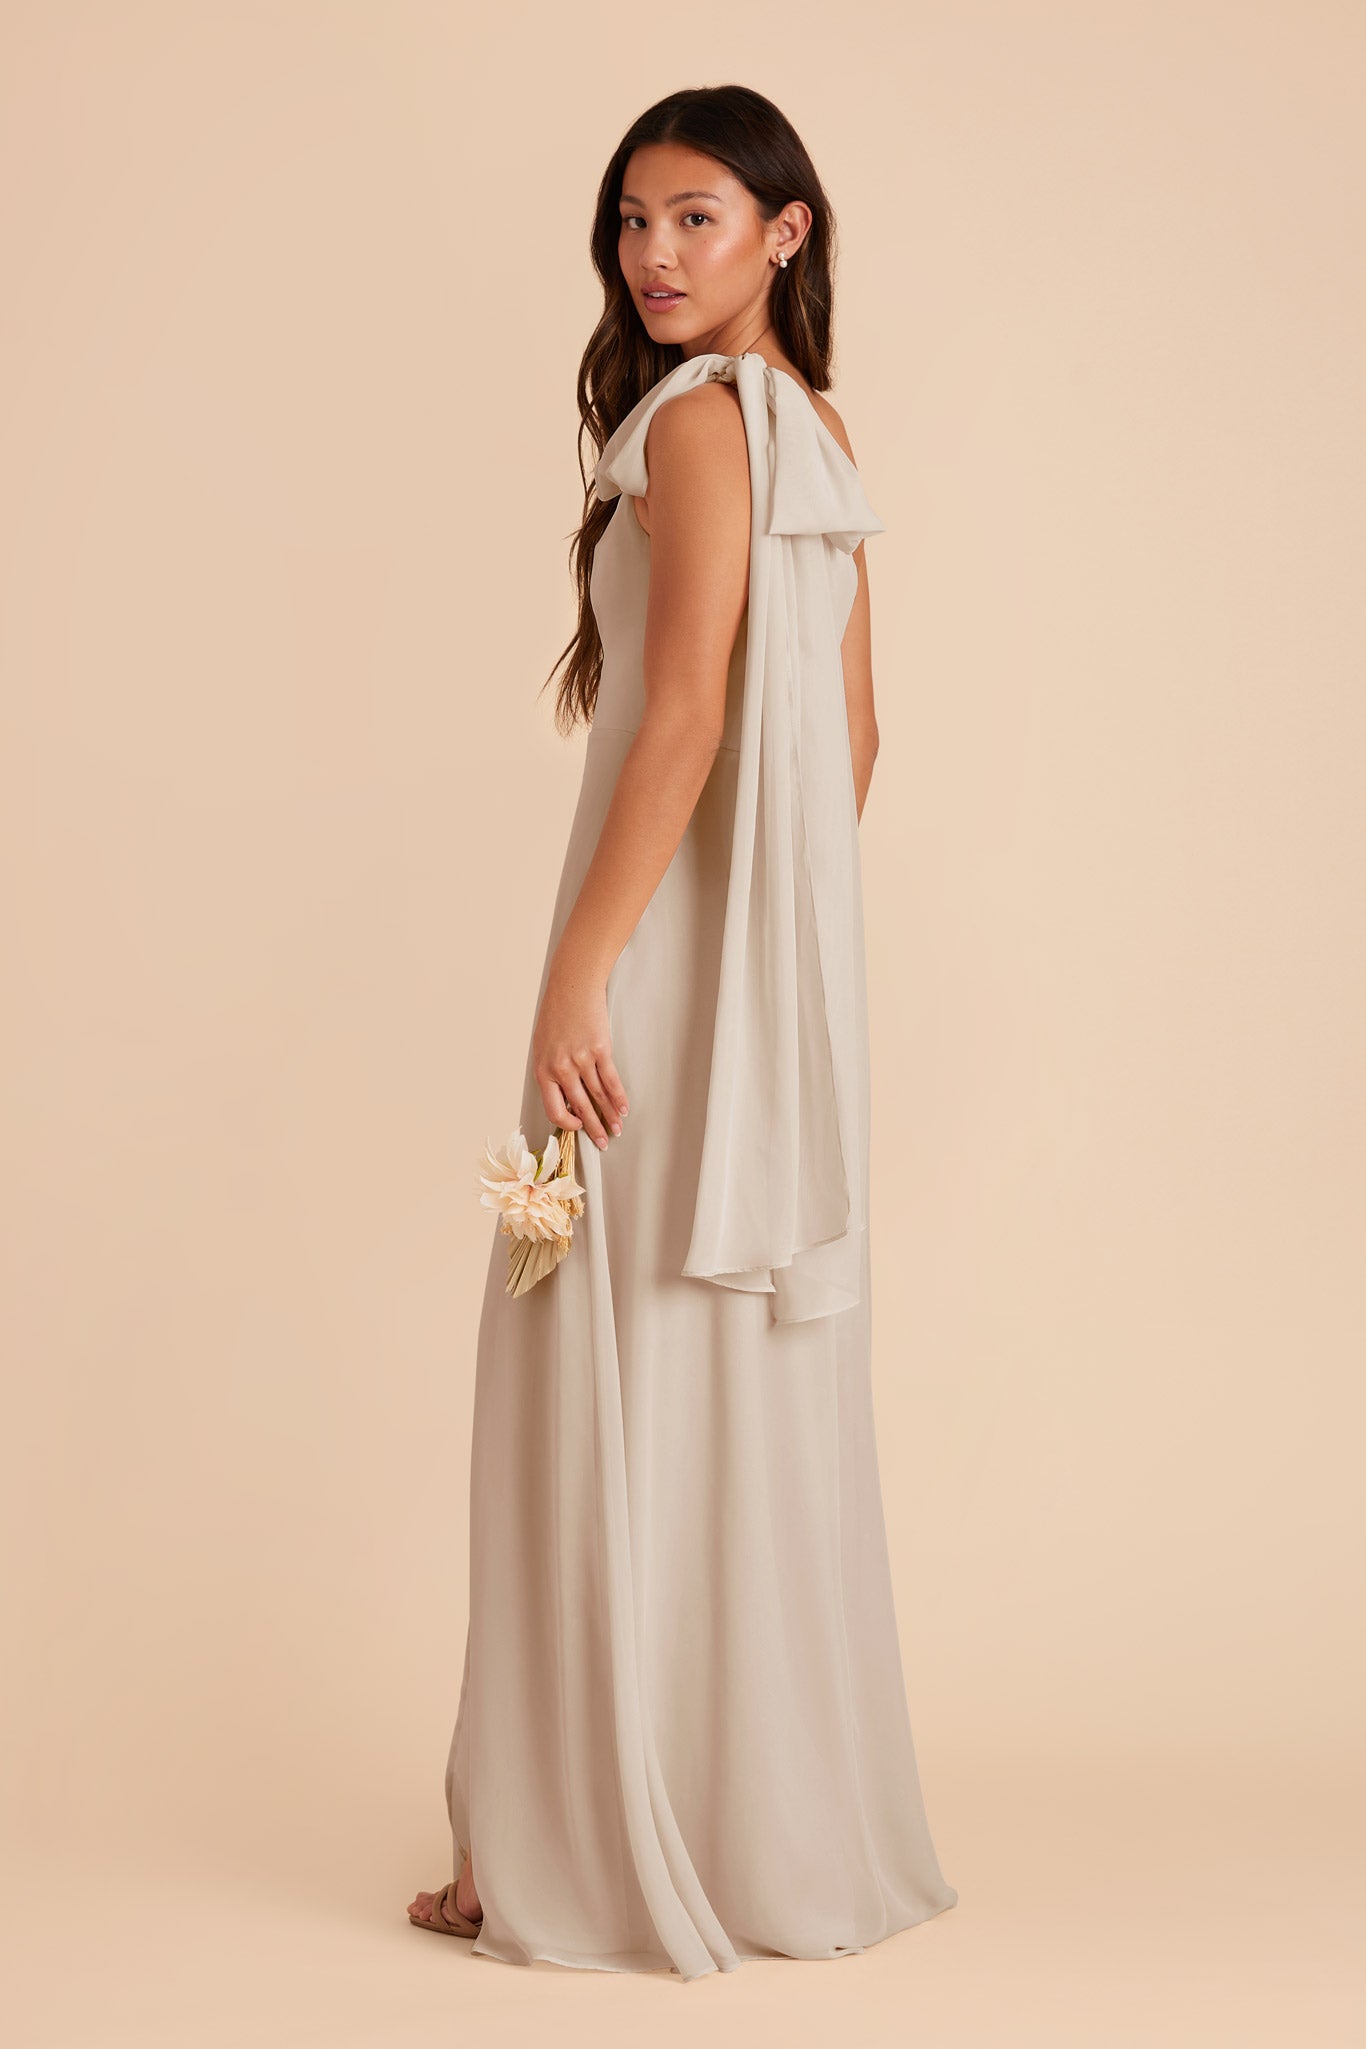  Neutral Champagne Melissa Chiffon Dress by Birdy Grey